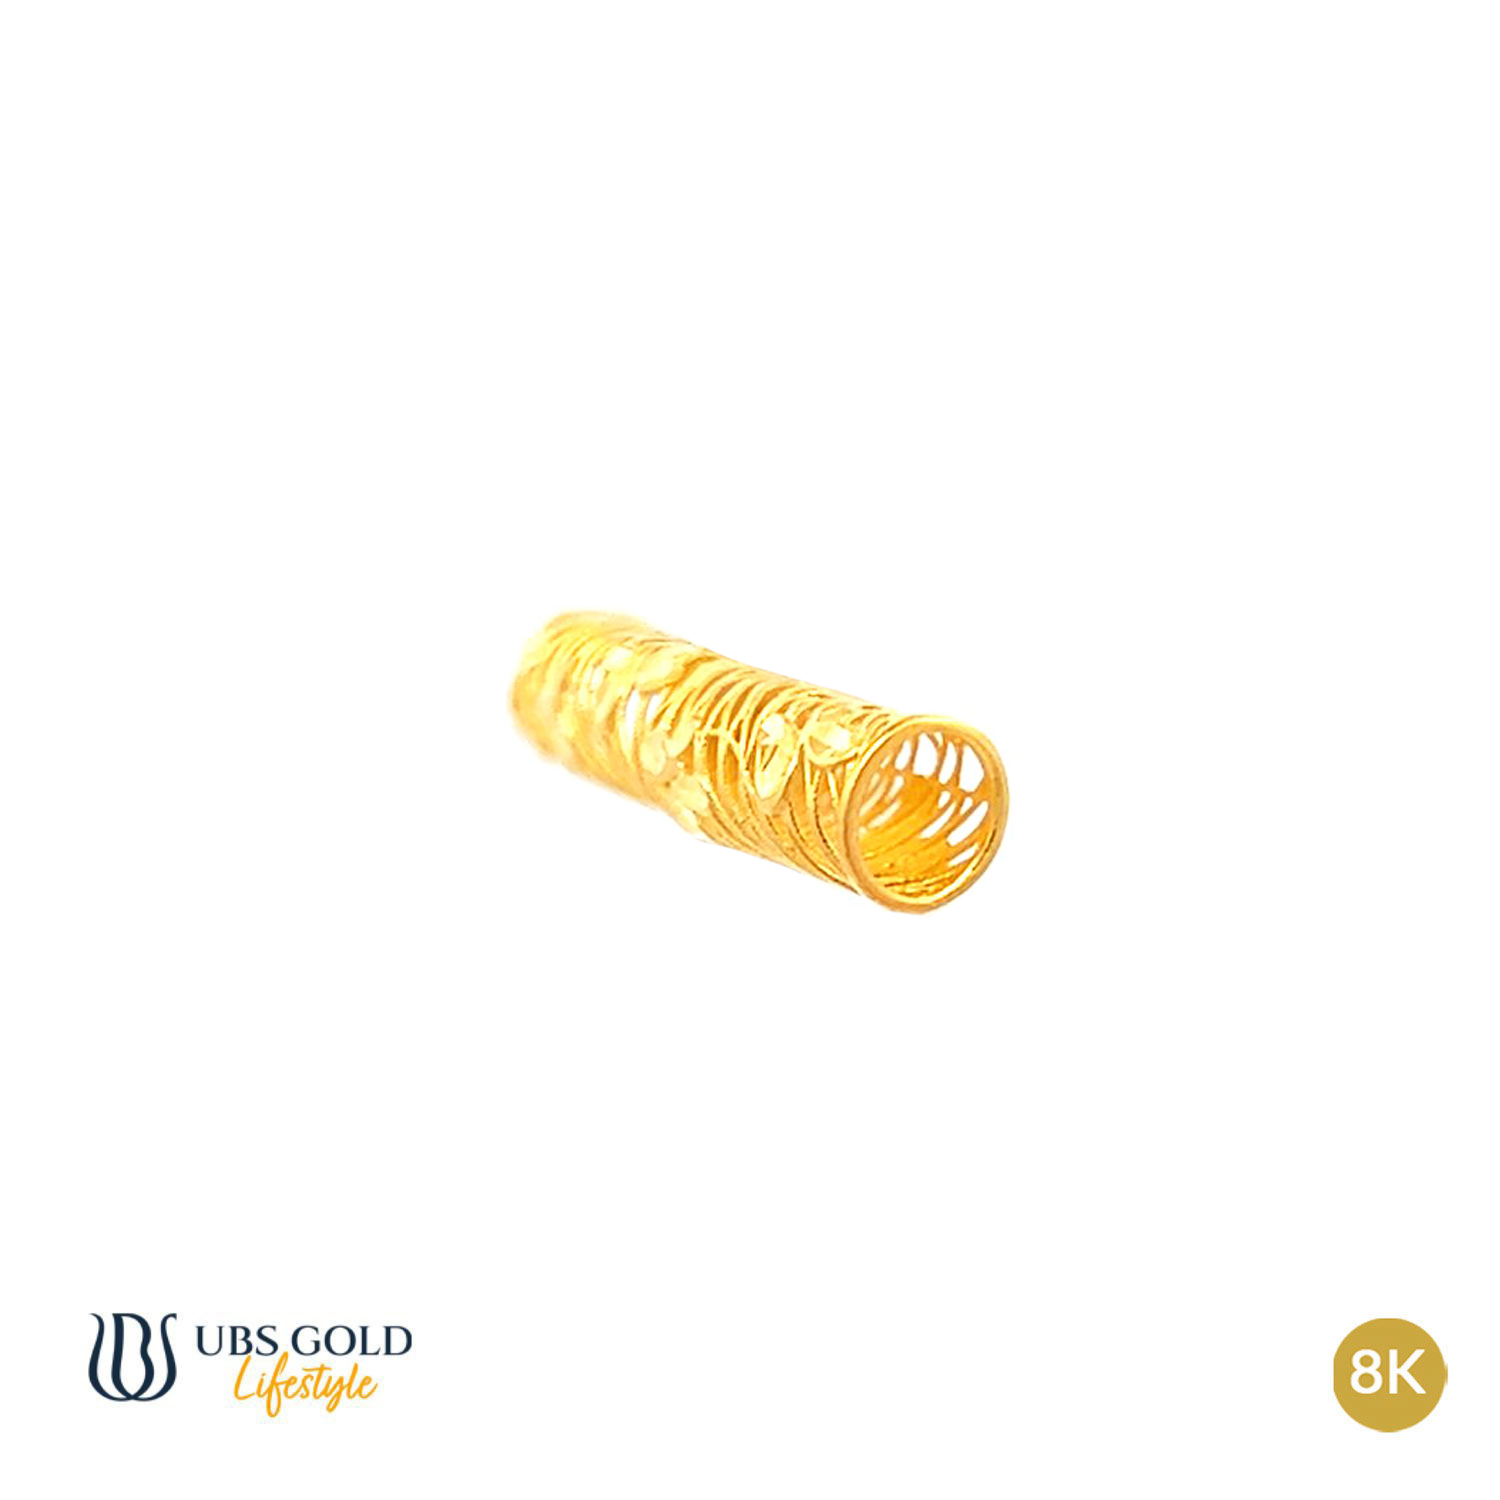 UBS Gold Liontin Emas Sakura - Cdm0054 - 8K